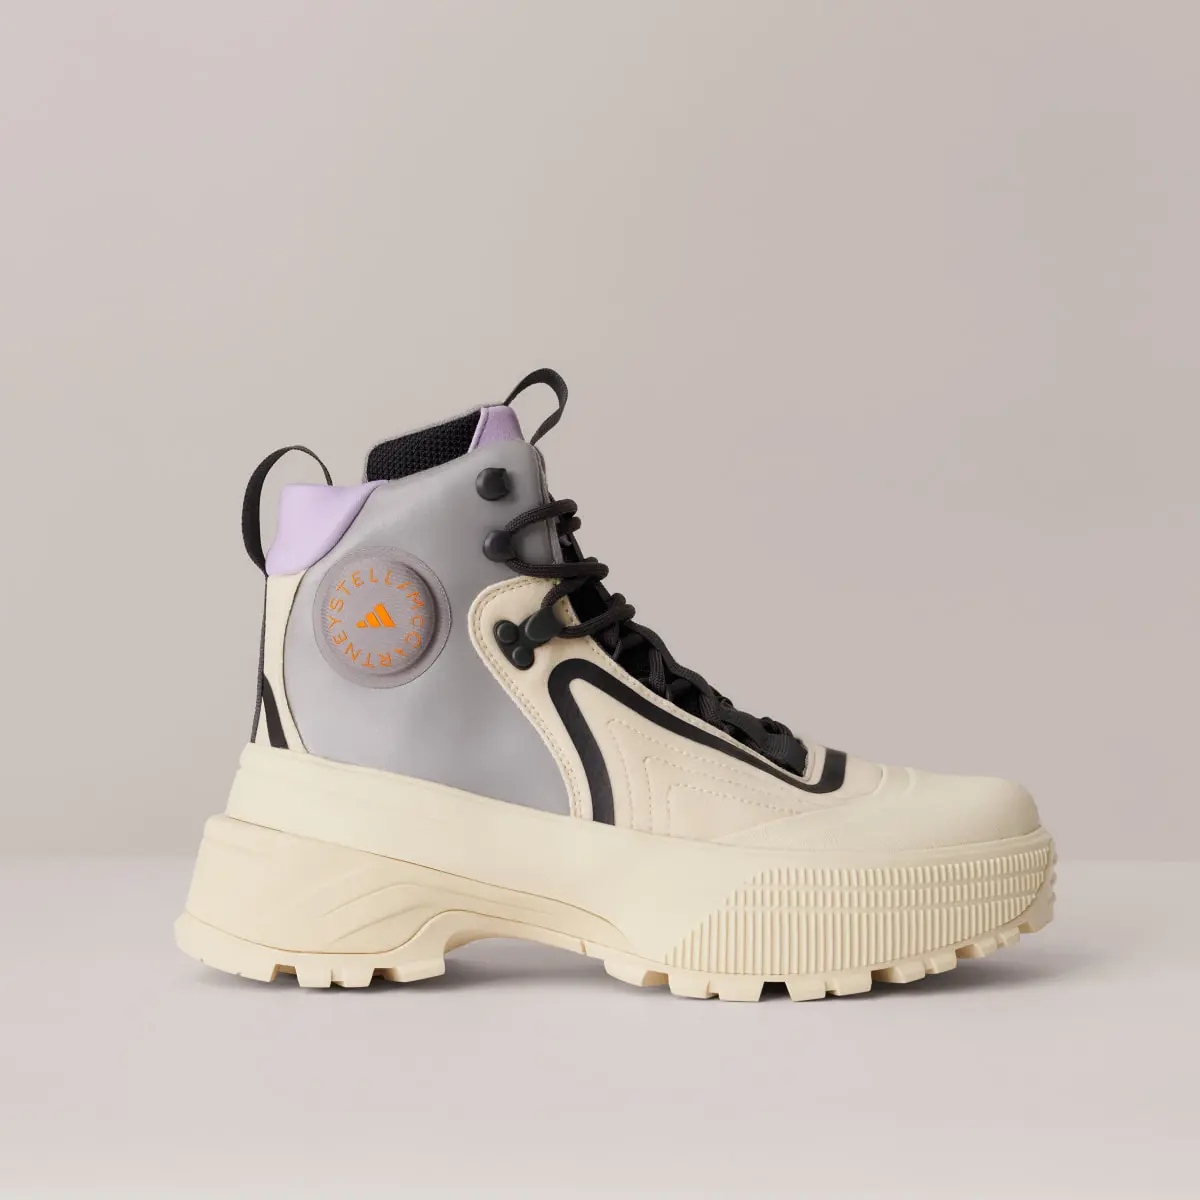 Adidas by Stella McCartney x Terrex Hiking Boots. 3